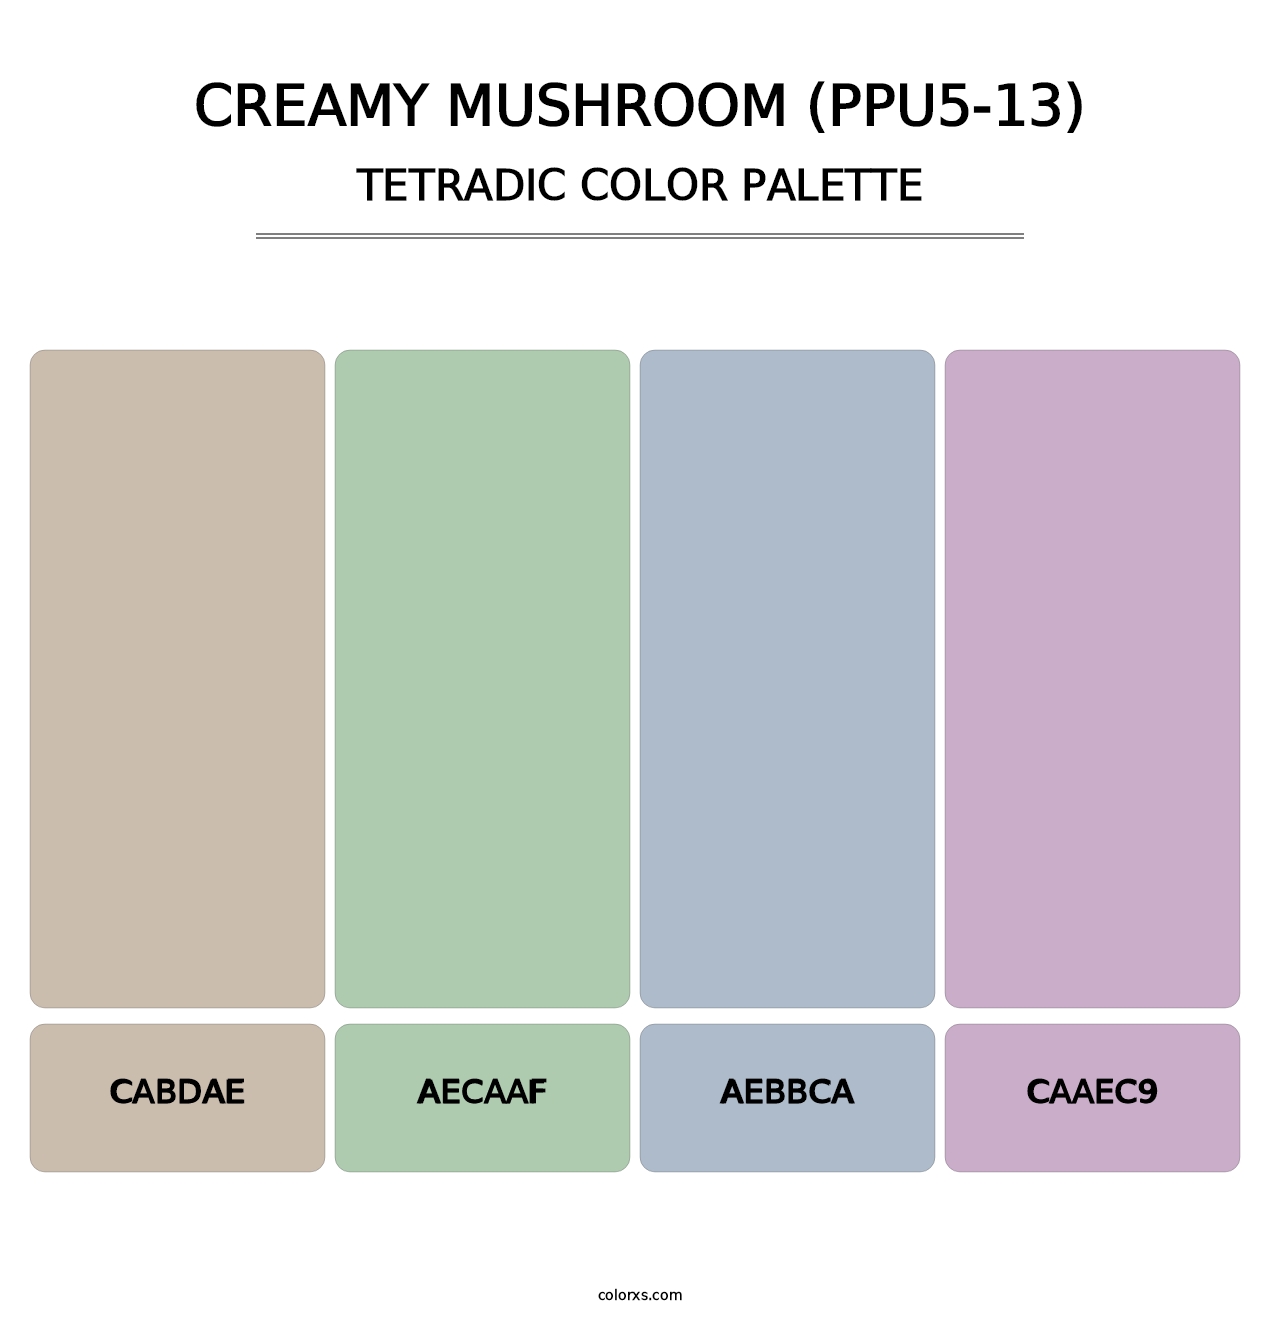 Creamy Mushroom (PPU5-13) - Tetradic Color Palette